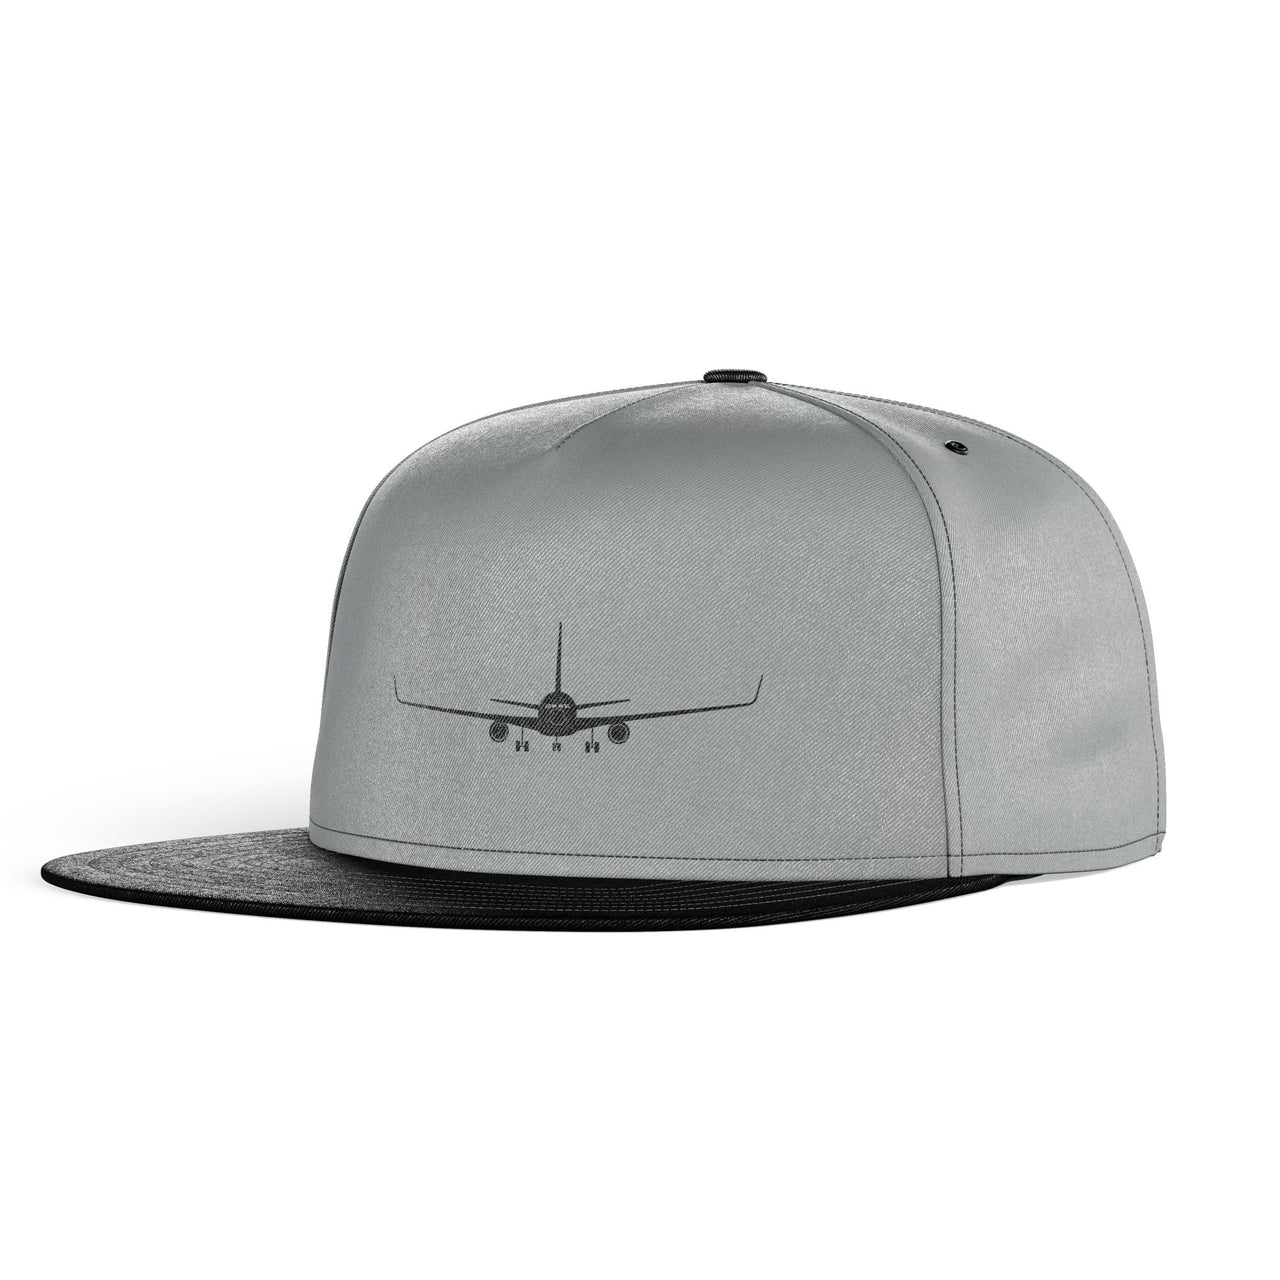 Boeing 767 Silhouette Designed Snapback Caps & Hats